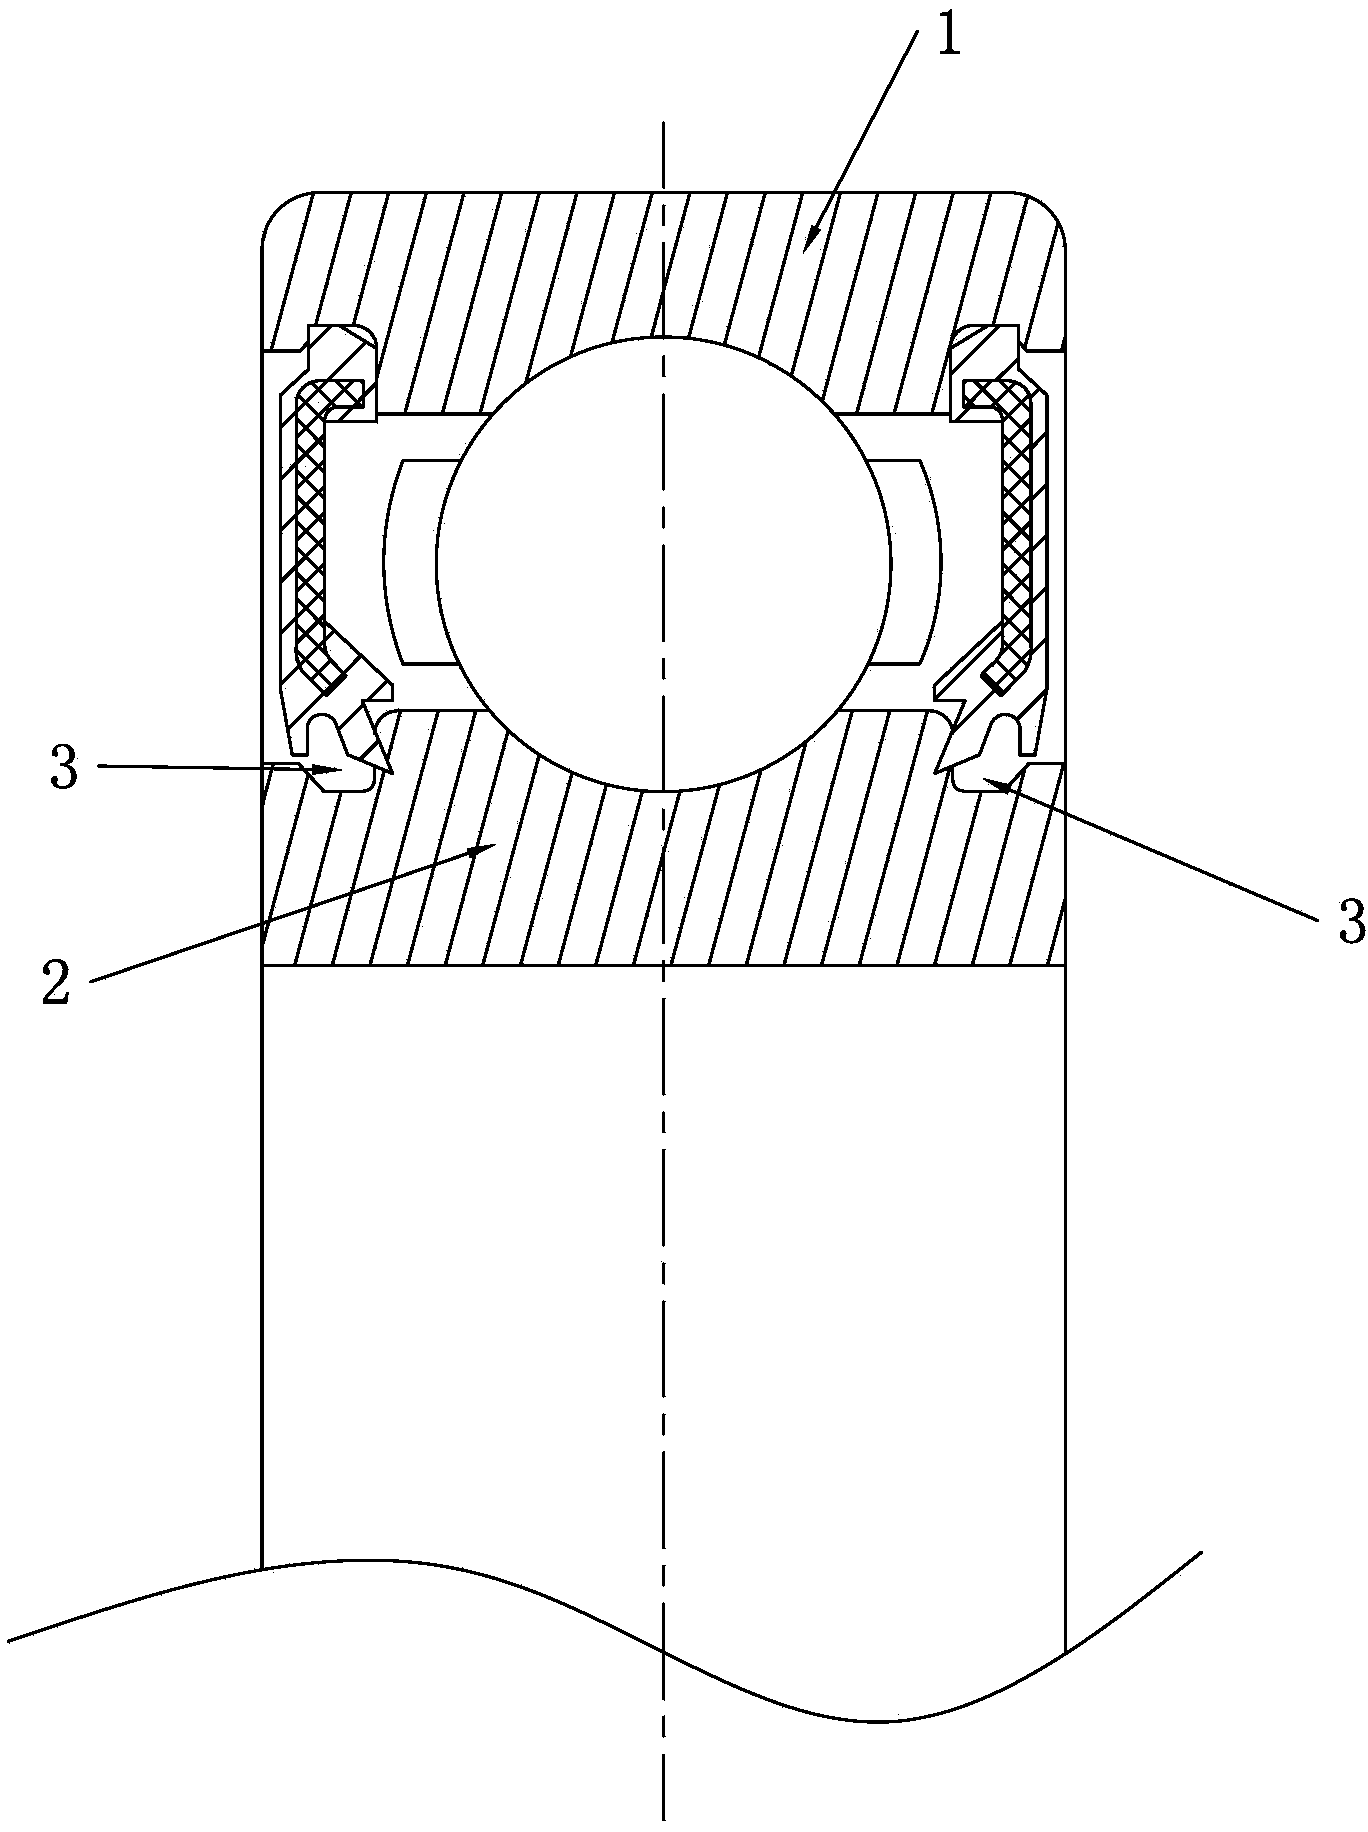 Bearing seal groove forming plunge-cut grinding method